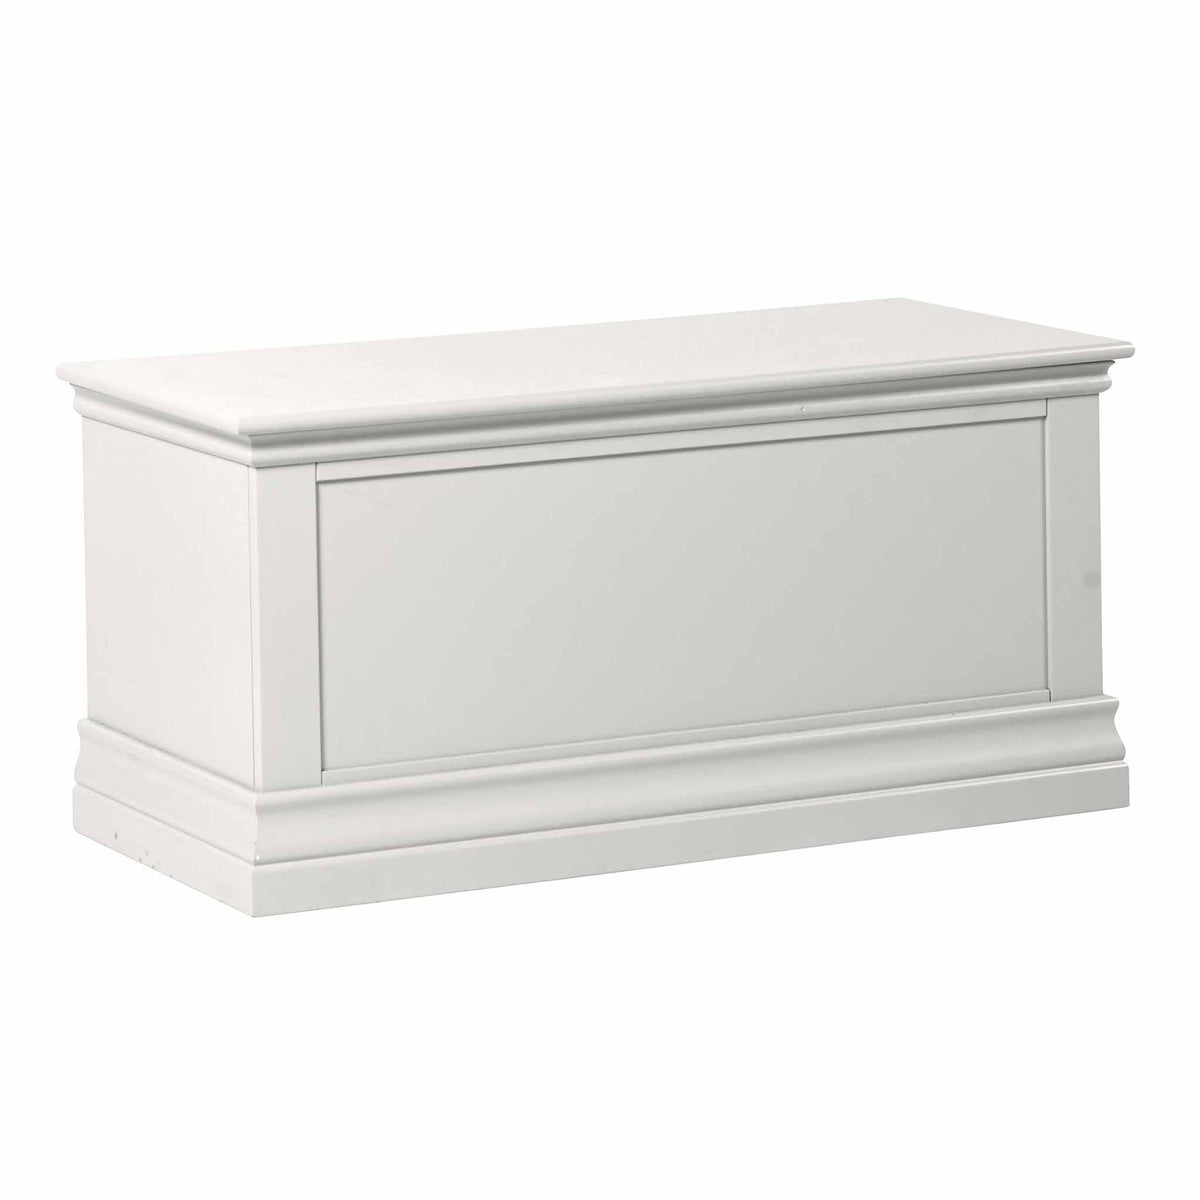 Melrose White Blanket Storage Box from Roseland Furniture